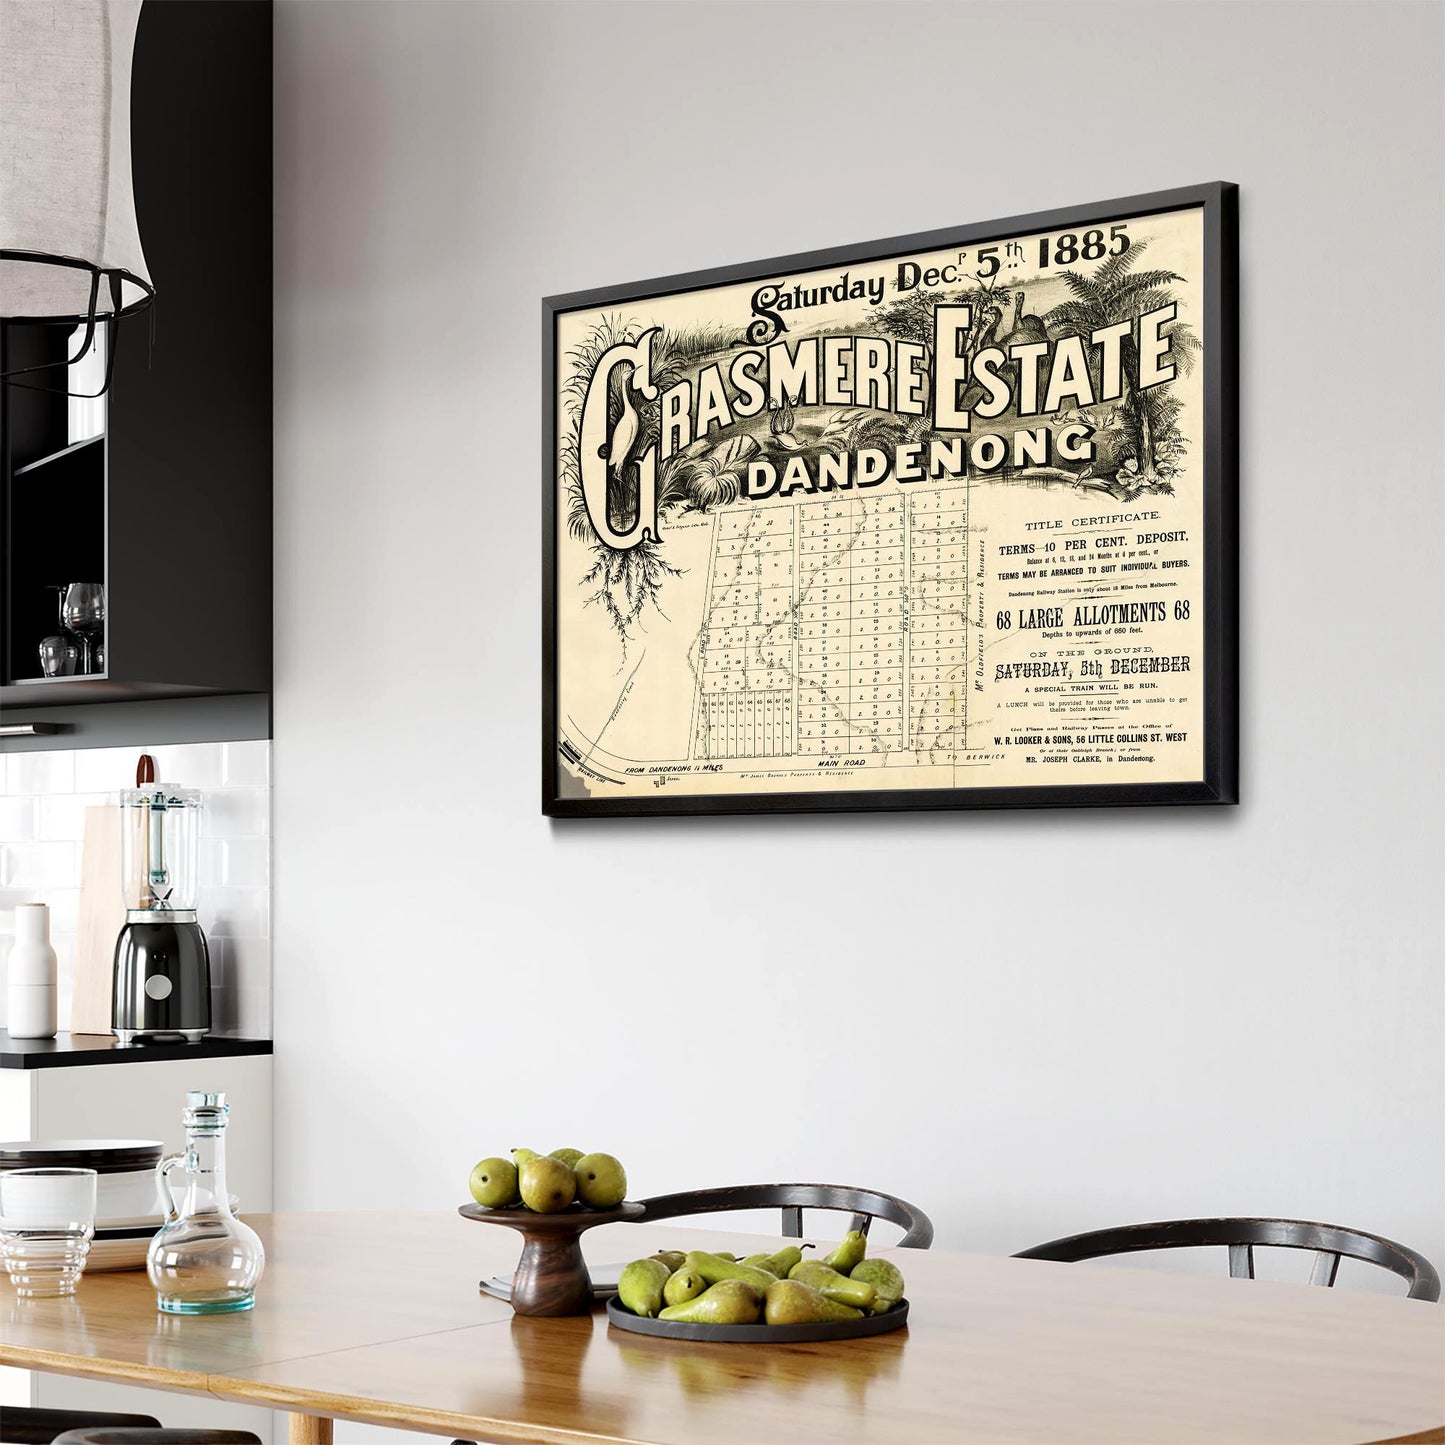 Dandenong Melbourne Vintage Real Estate Advert Art #2 - The Affordable Art Company